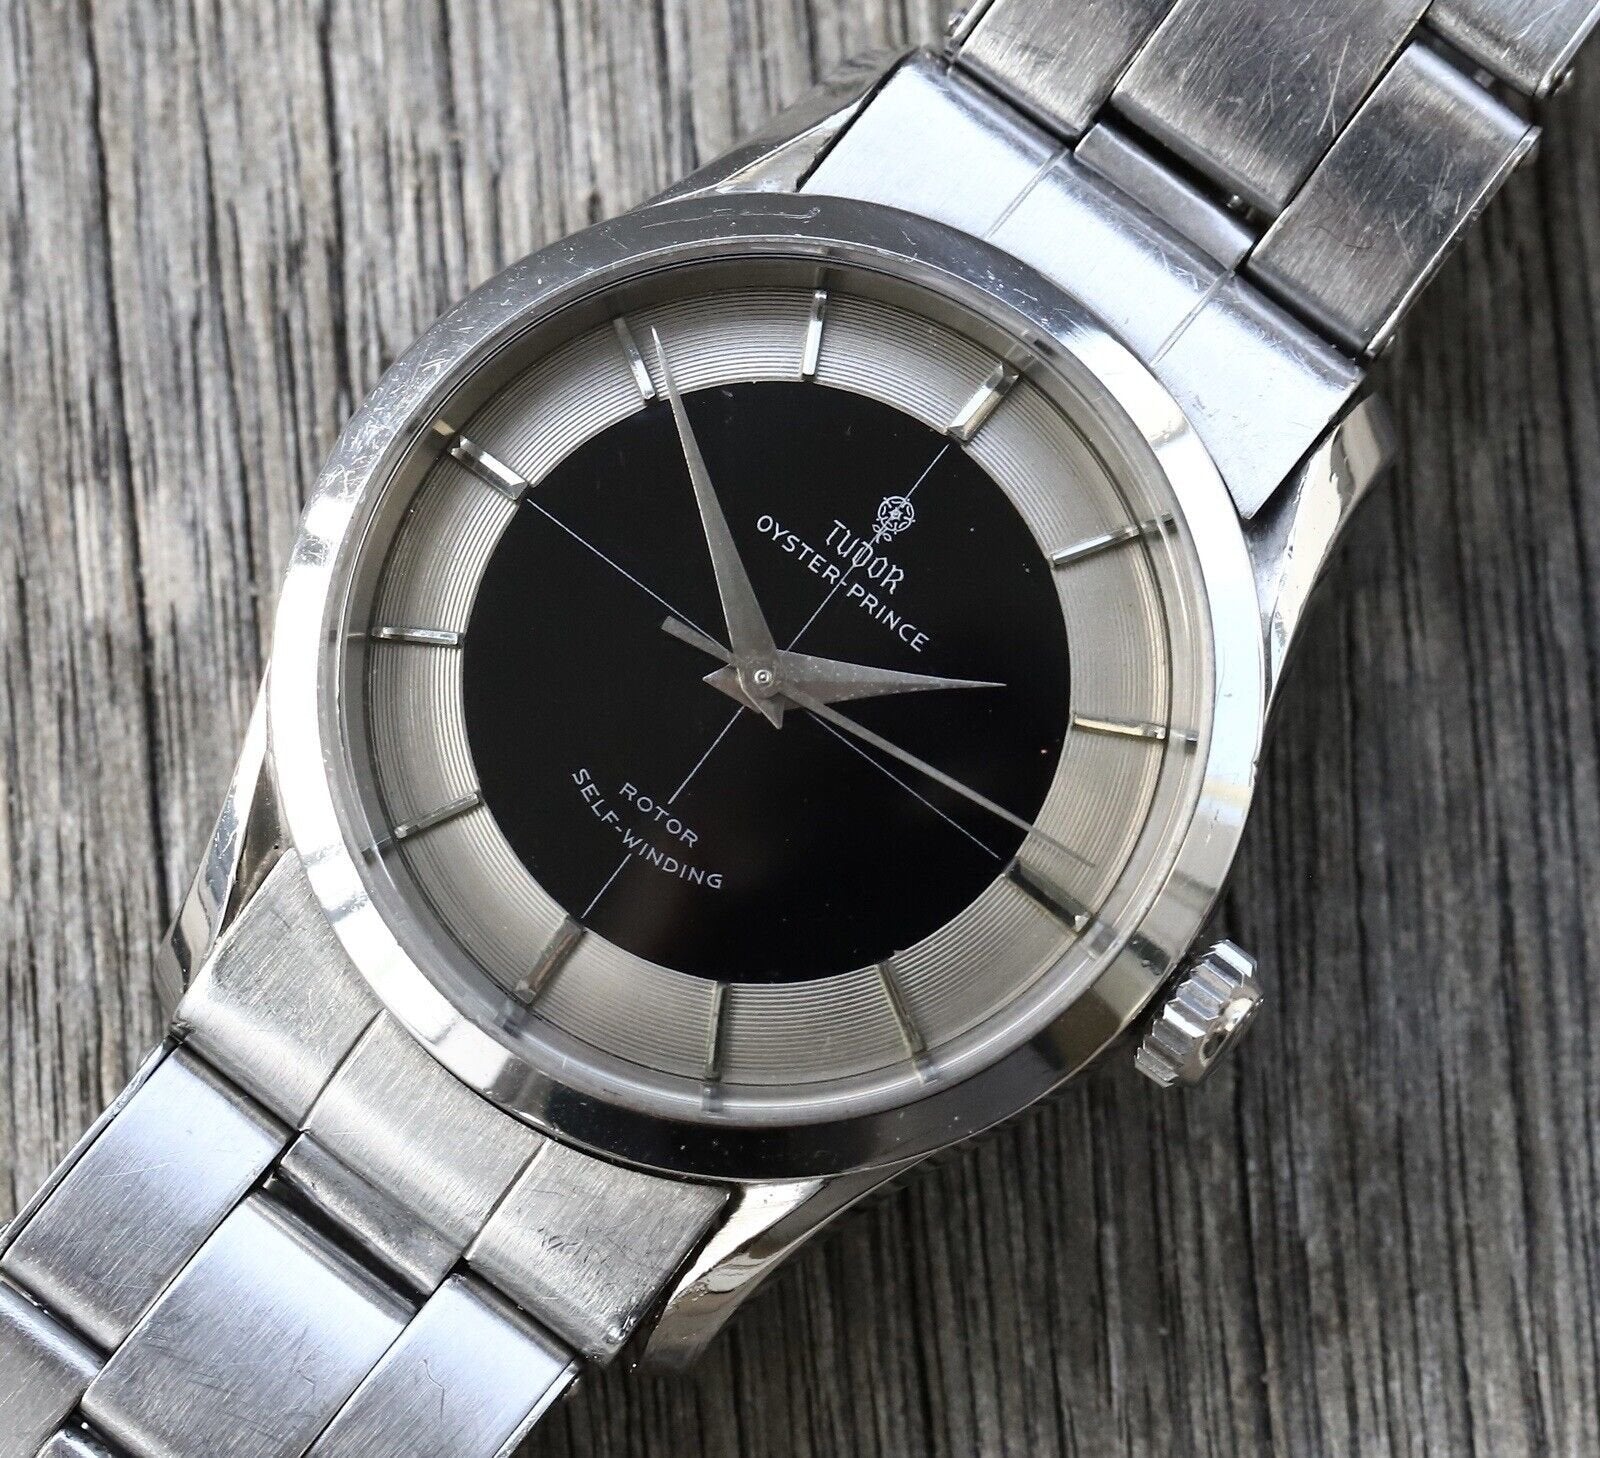 3 Best Tuxedo Watches - Rolex Sky Dweller, AP Royal Oak & Cartier Roadster  | SwissWatchExpo - YouTube